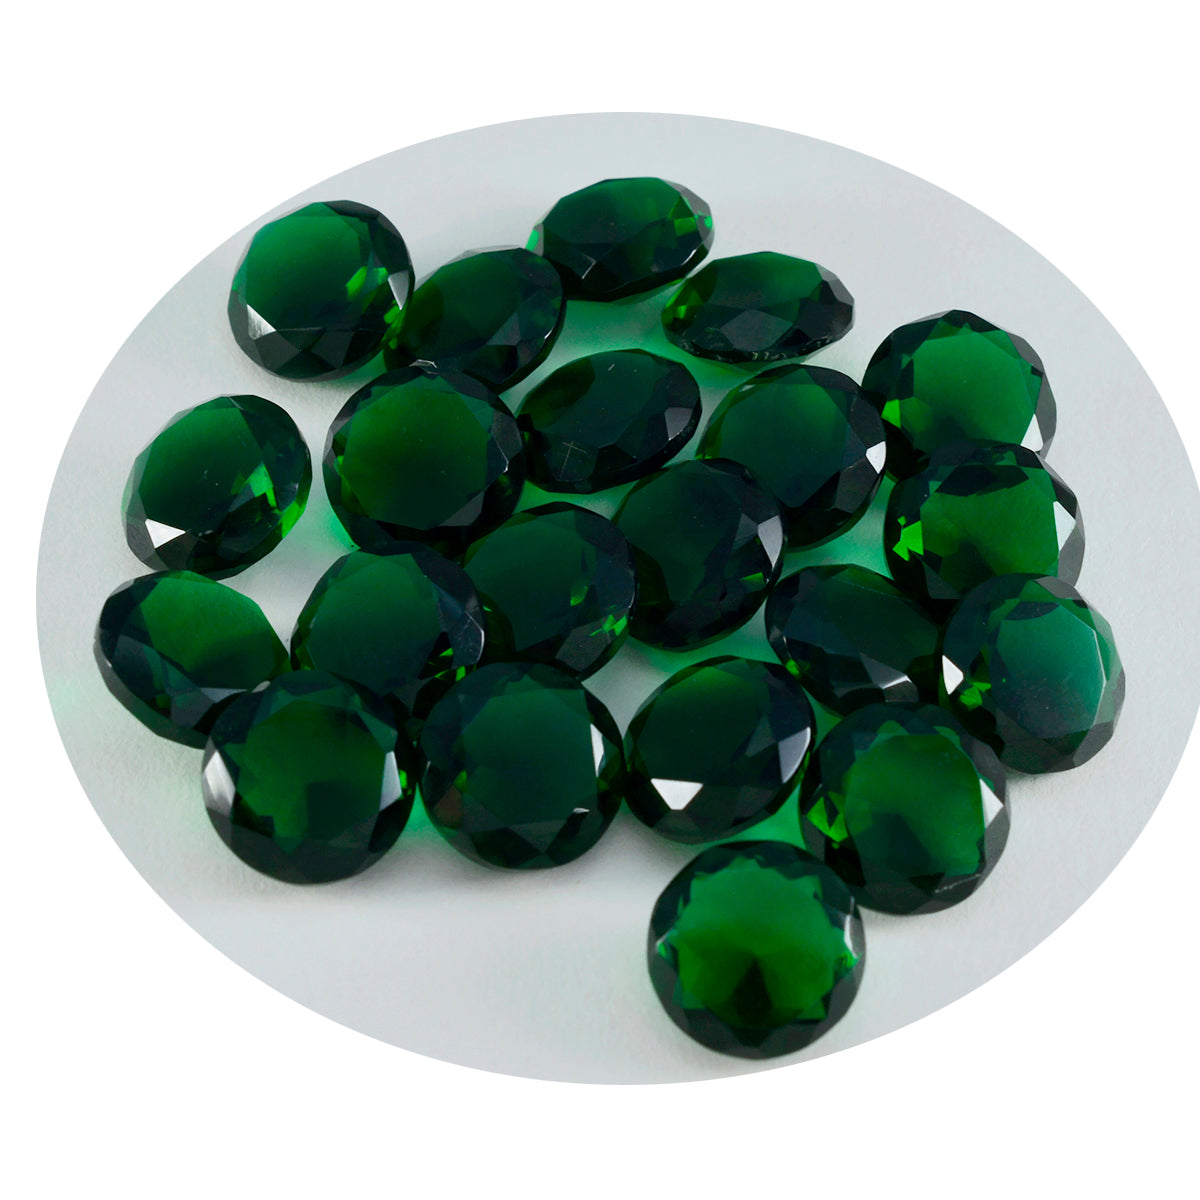 Riyogems 1 Stück grüner Smaragd, CZ, facettiert, 10 x 10 mm, runde Form, A+1-Qualität, loser Stein